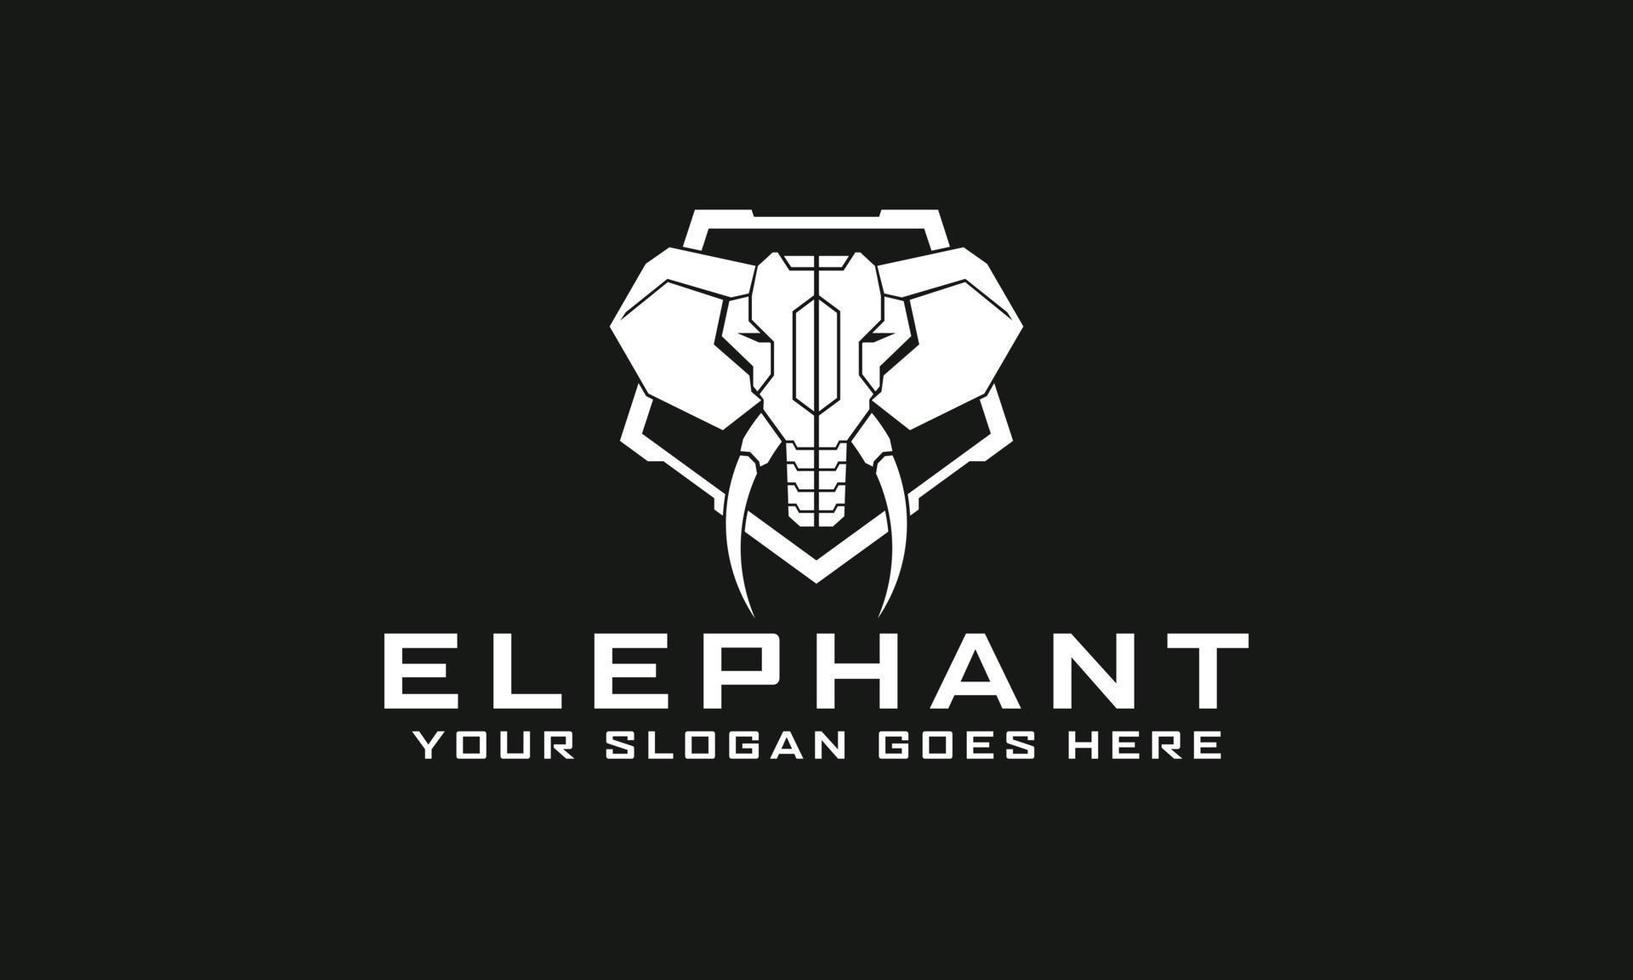 Elephant logo design. Vector illustration of an elephant with modern style. Modern Style icon design template.